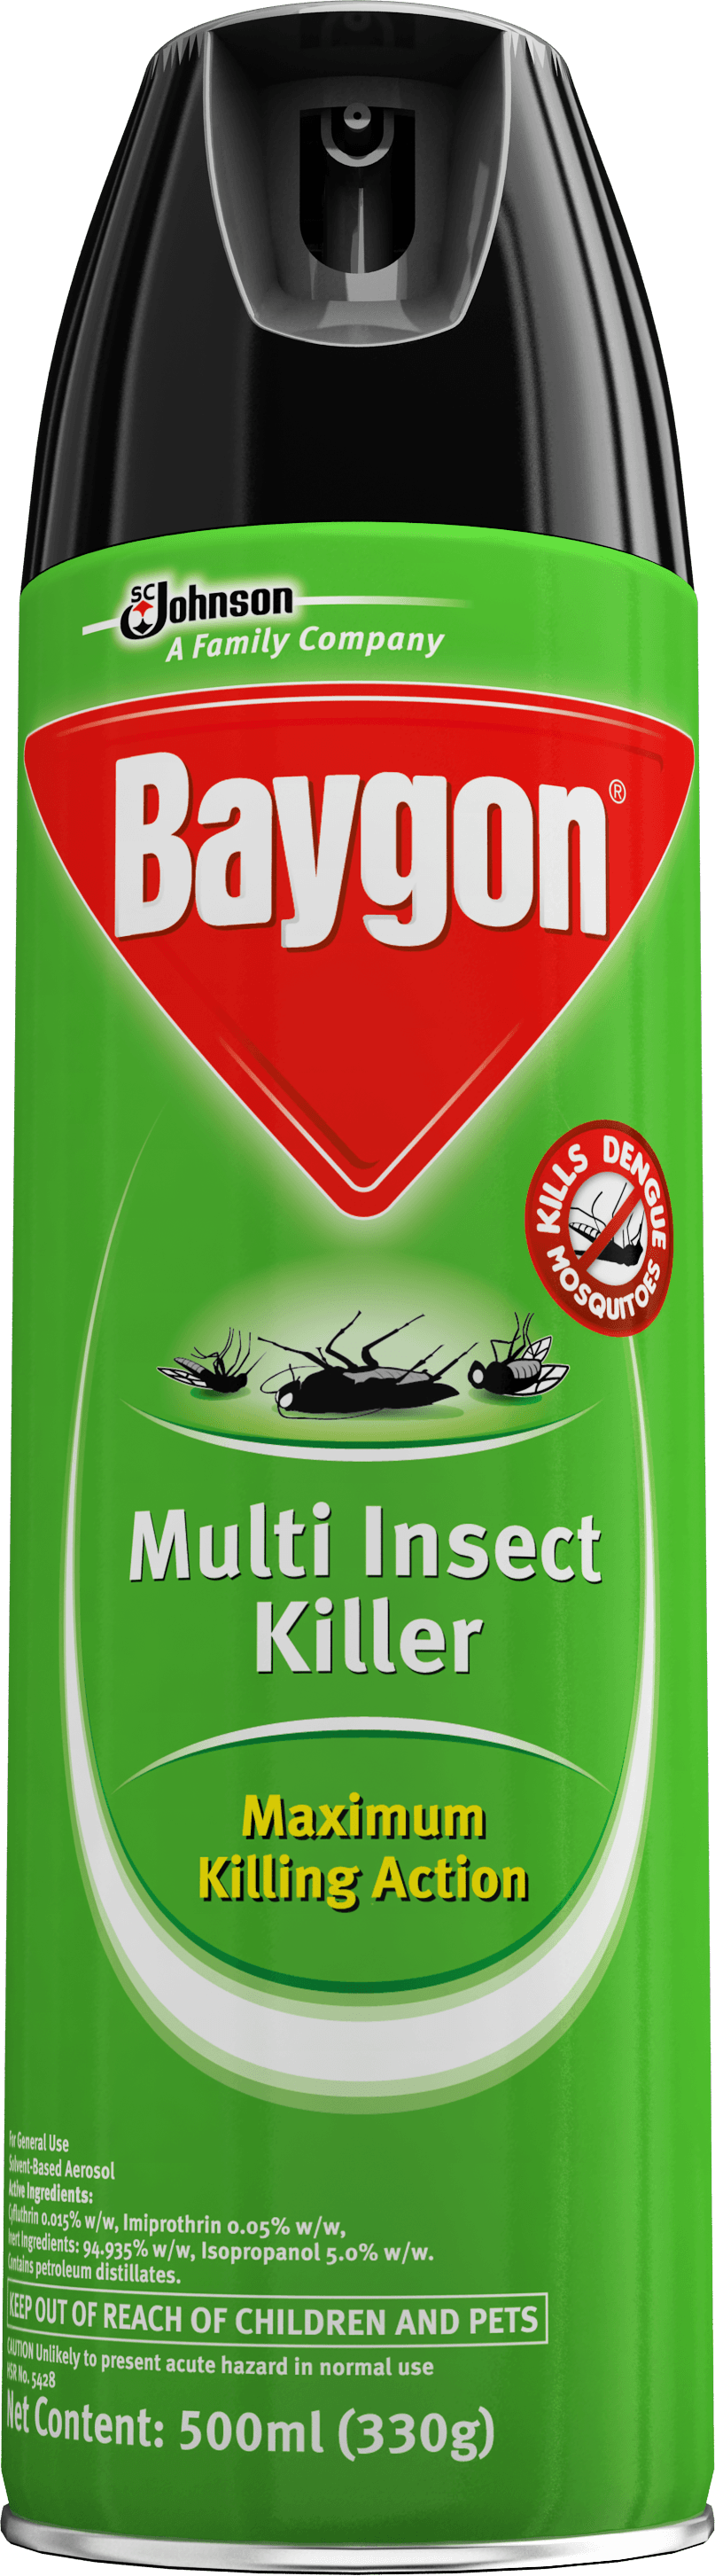 Baygon Logo - Baygon® brand Kills Bugs Dead!®